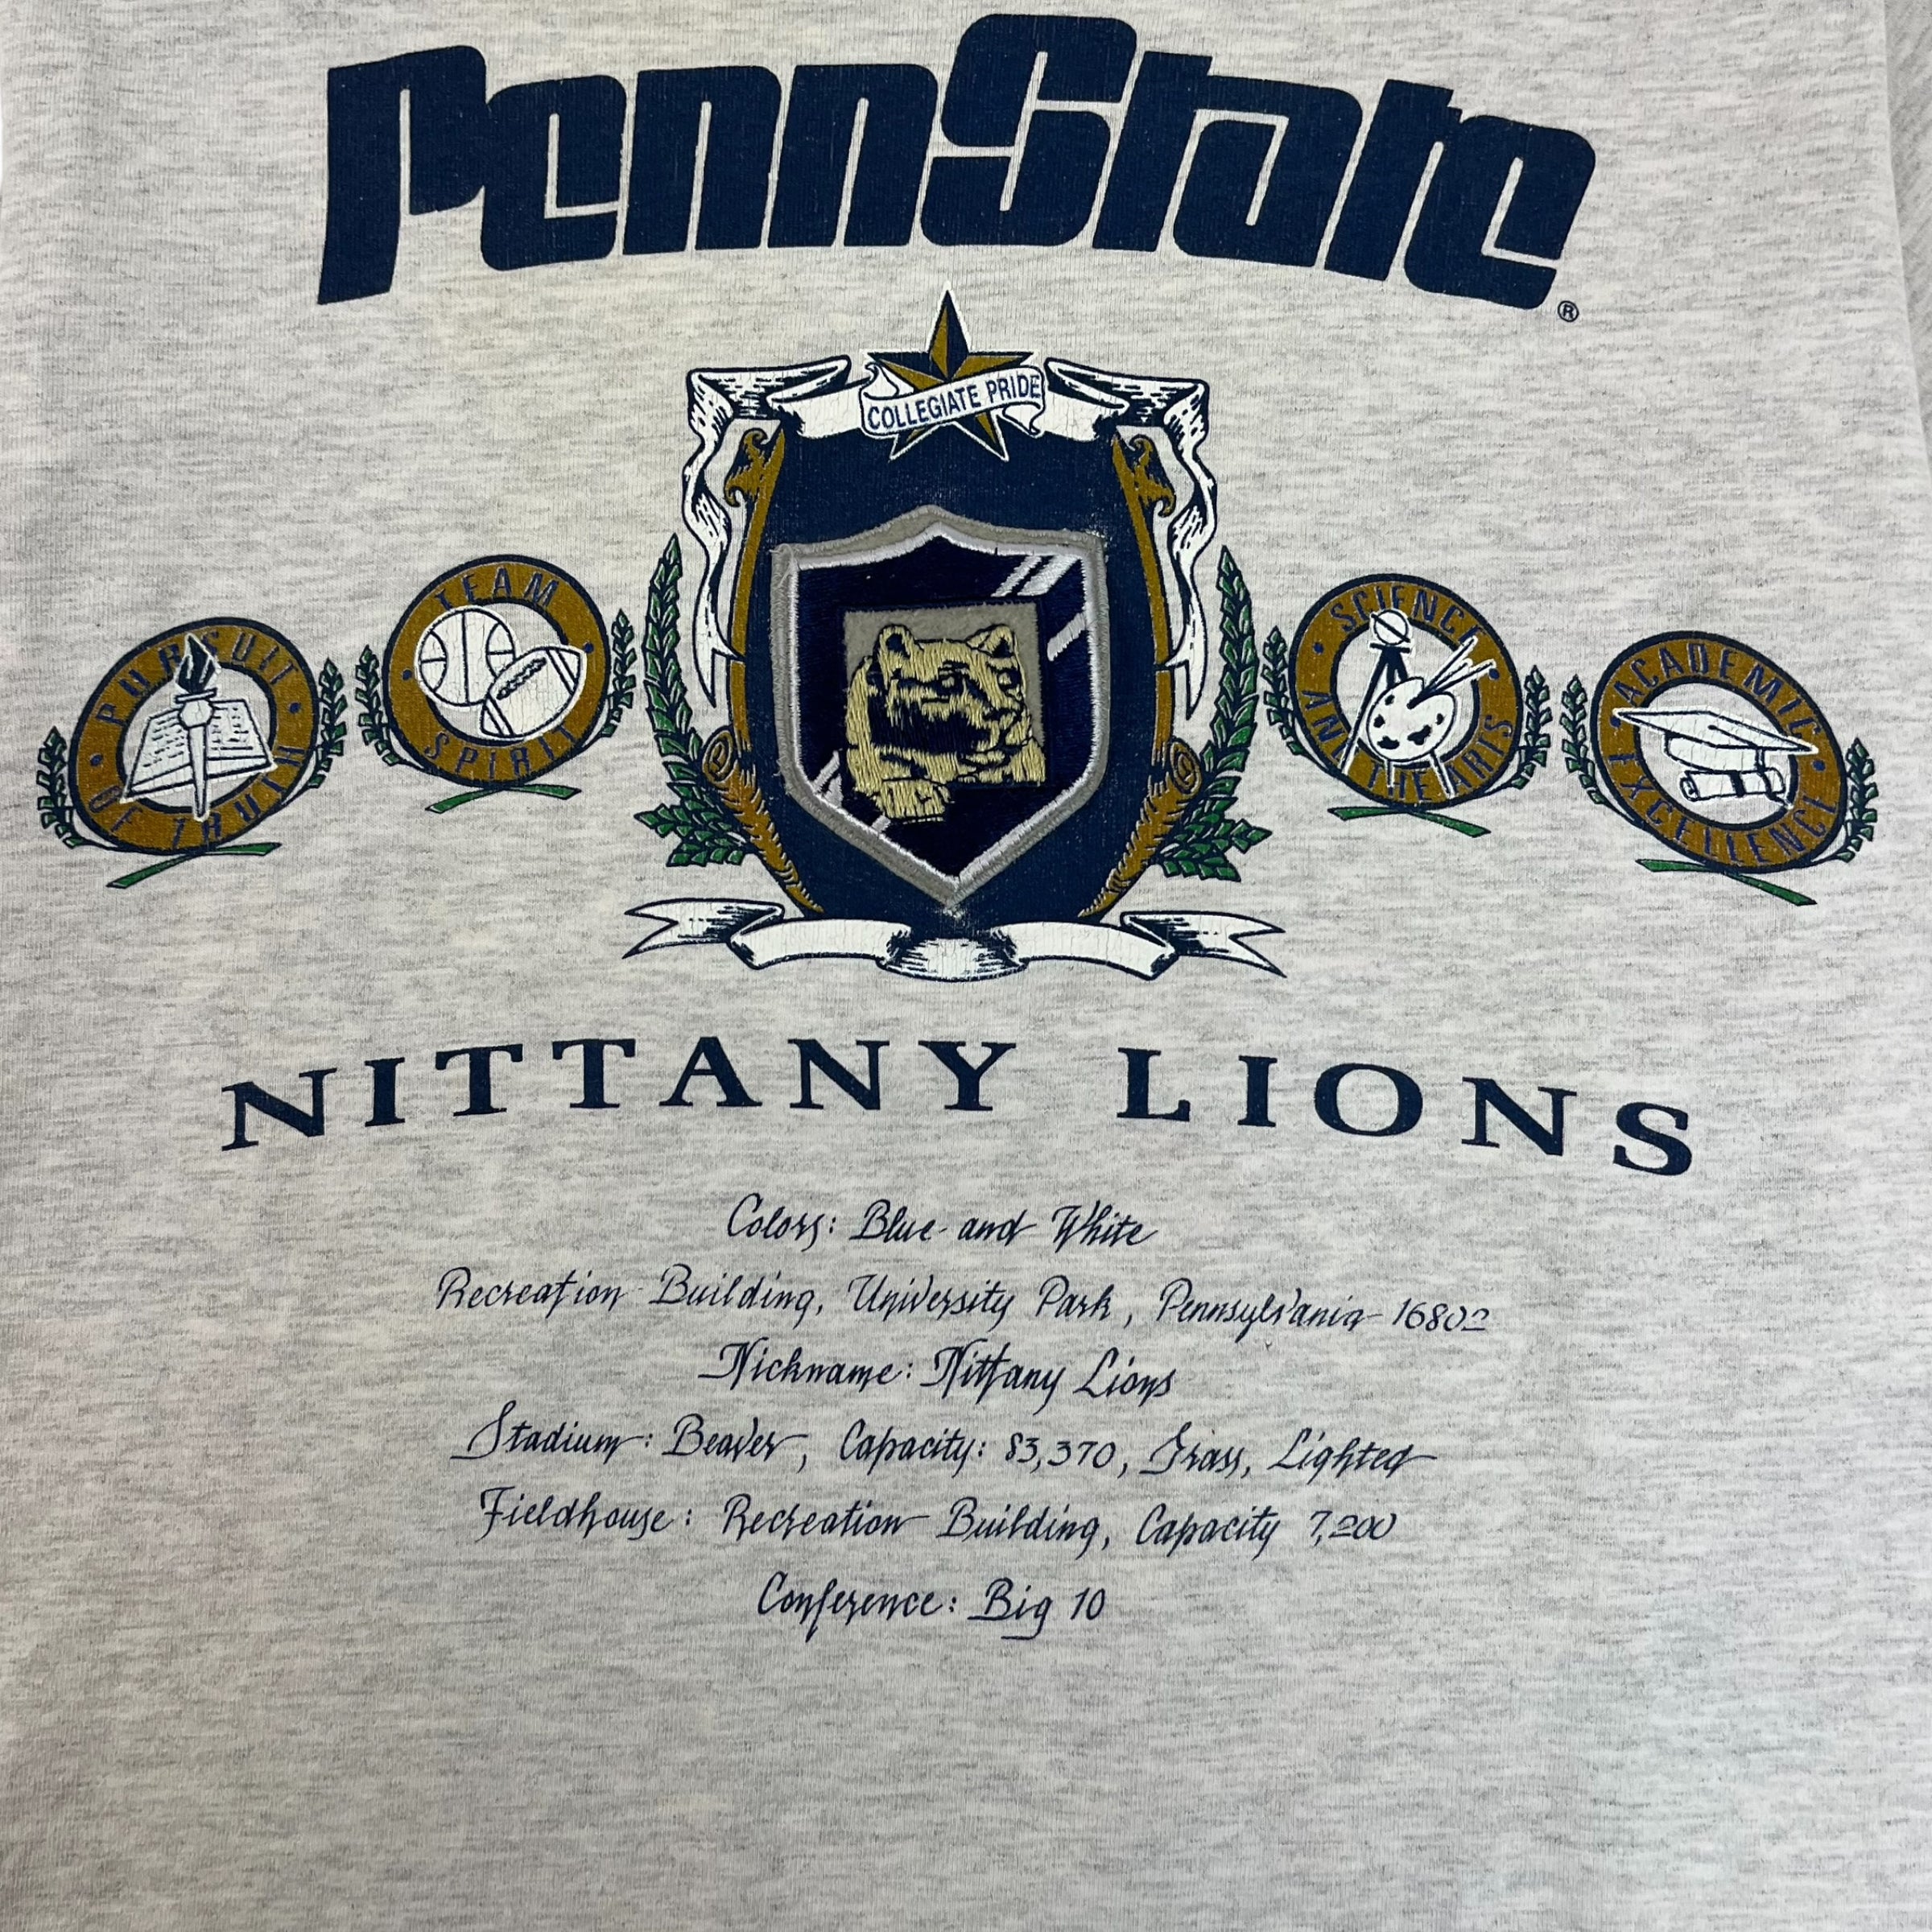 Vintage Penn State Nittany Lions Tee Grey